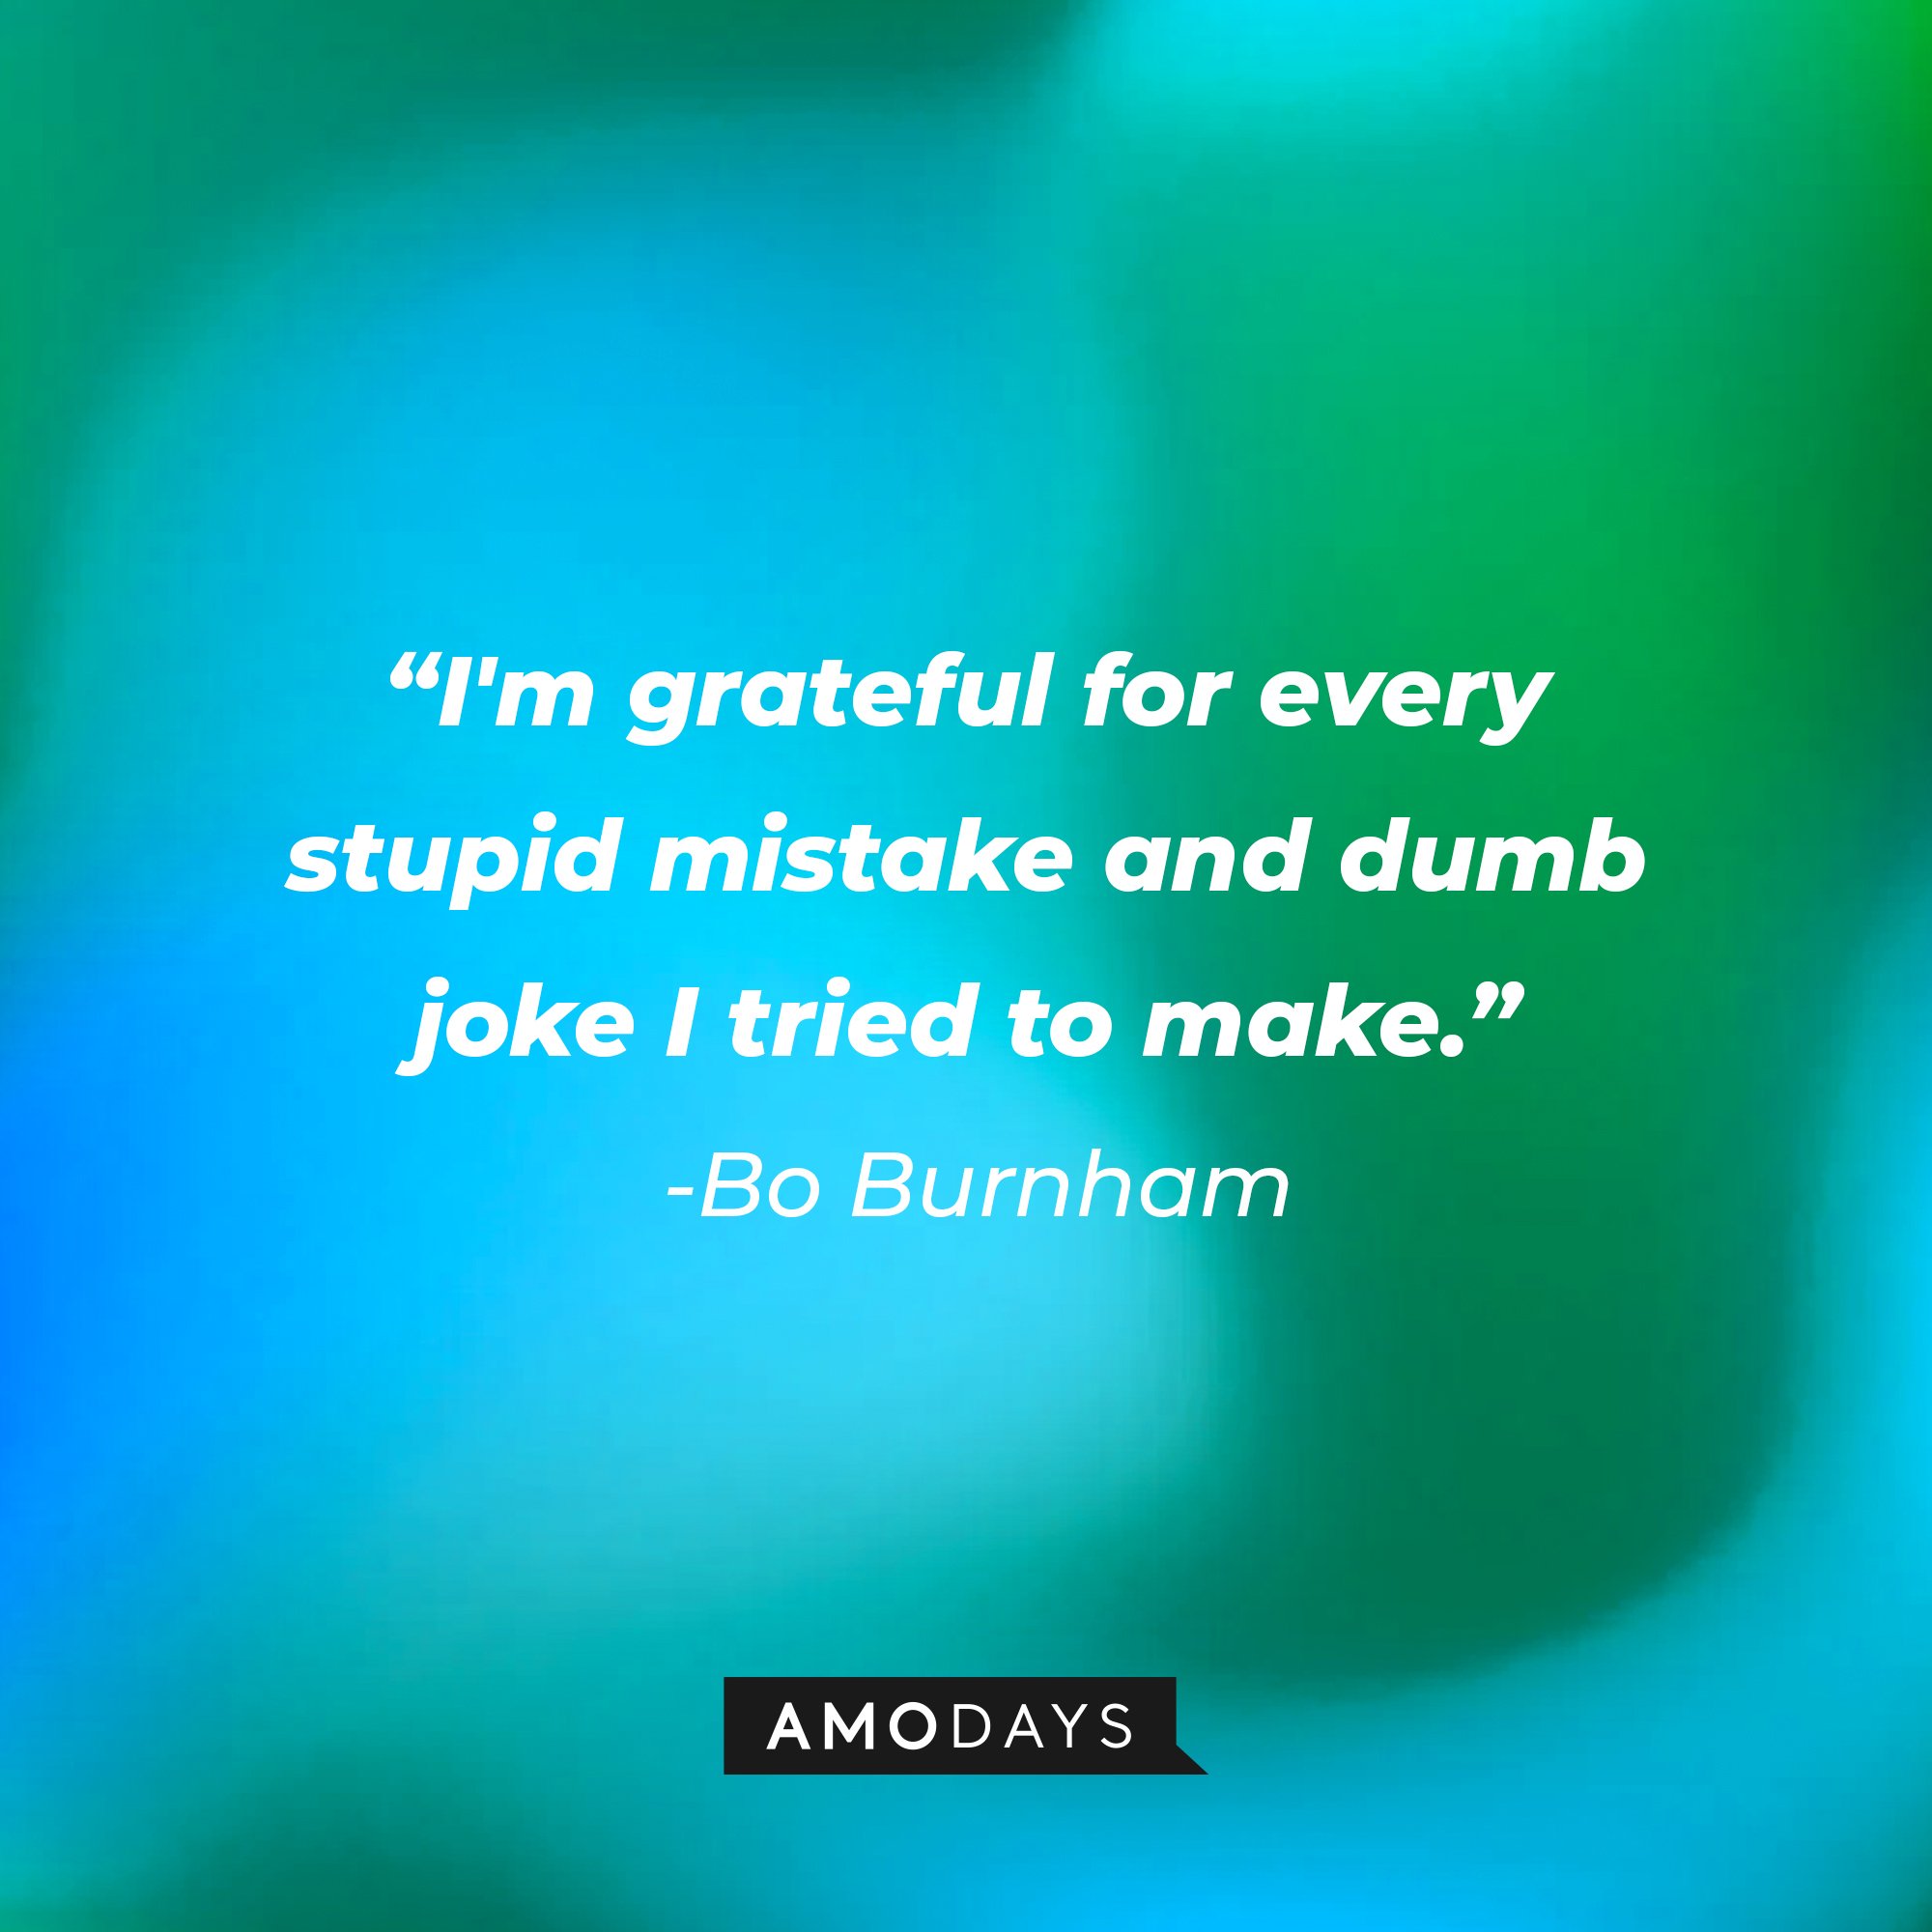 Bo Burnham's quote: "I'm grateful for every stupid mistake and dumb joke I tried to make." | Image: AmoDays